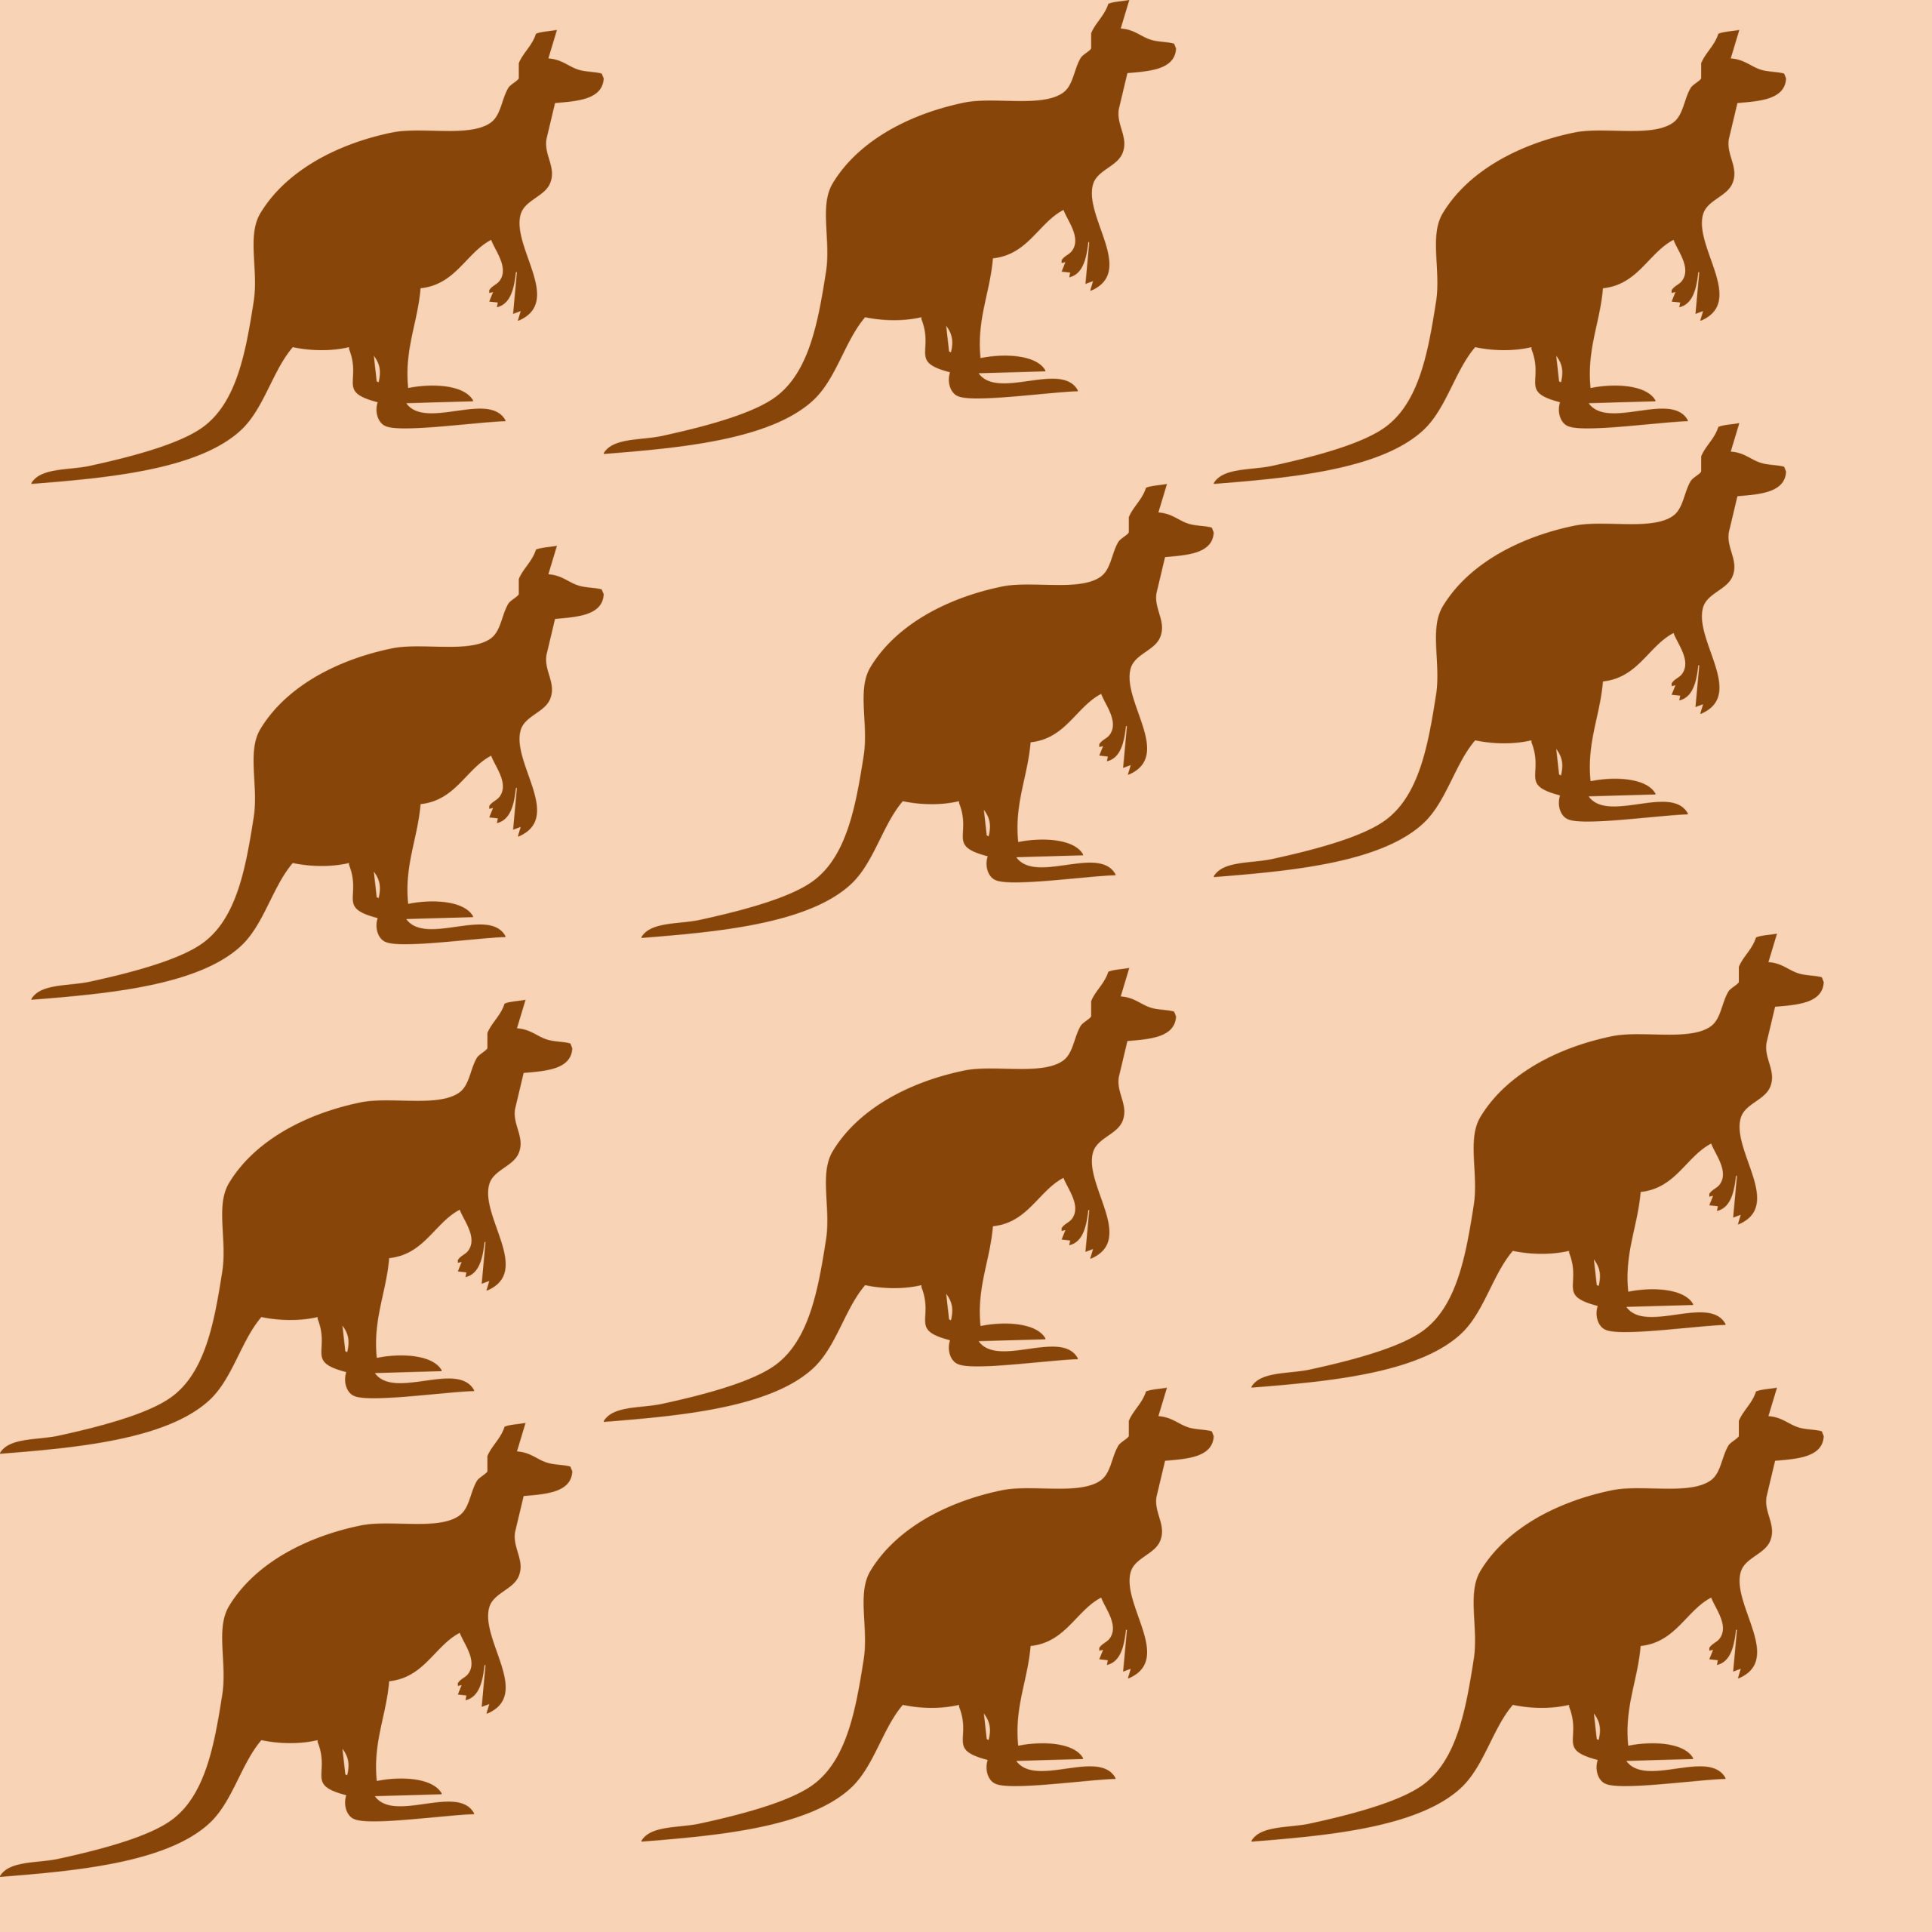 Animal illustration